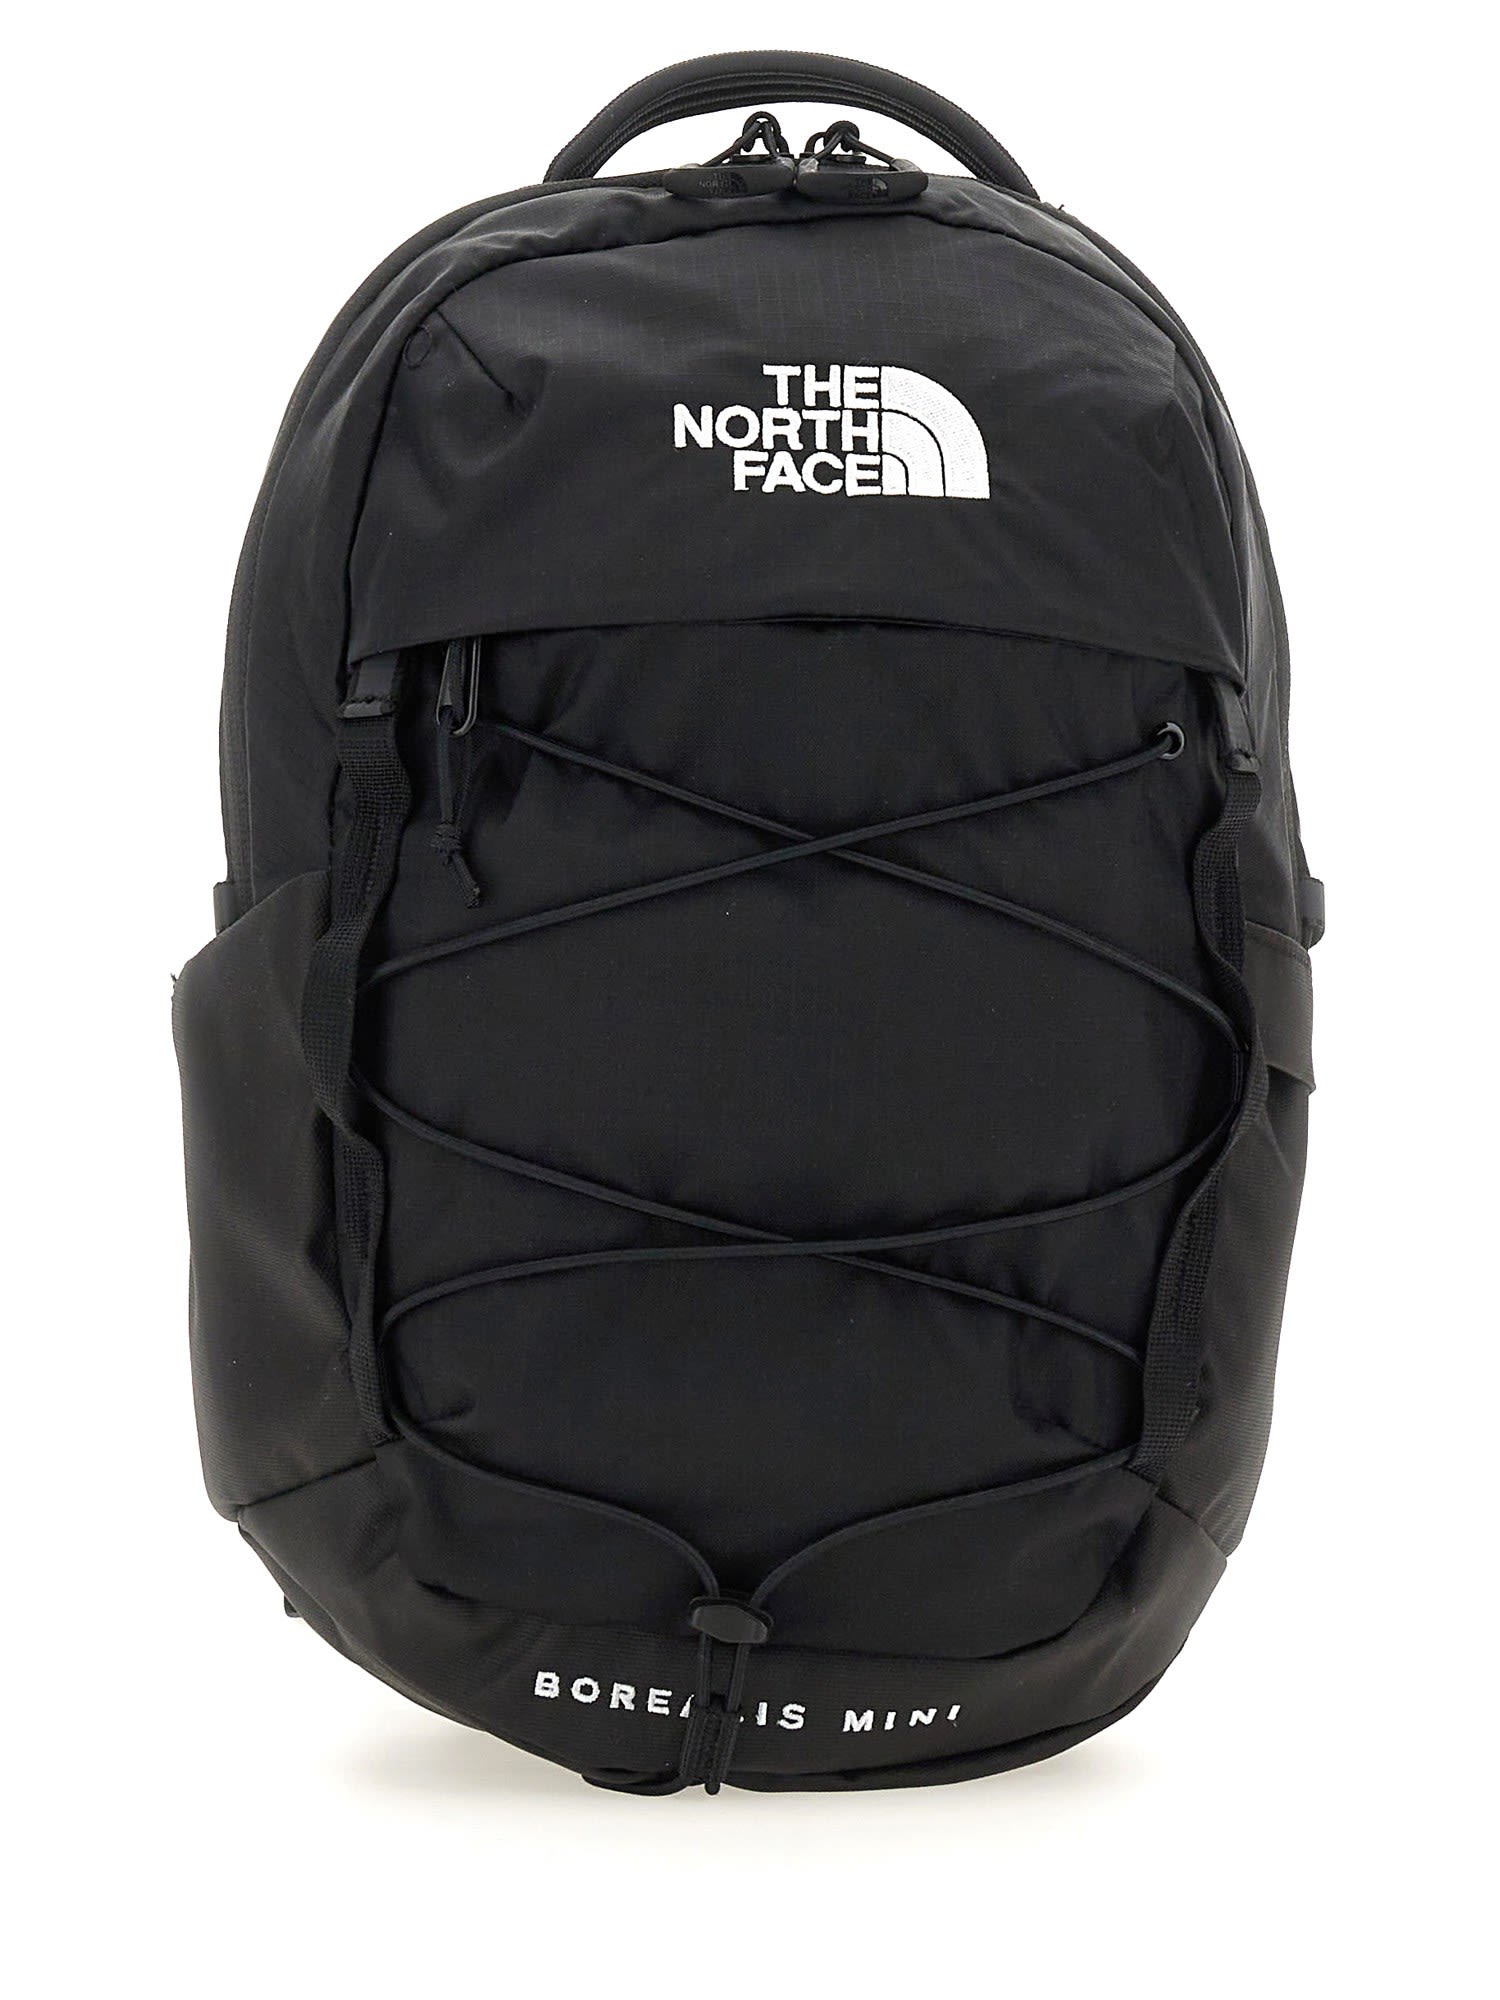 Mini Backpack With Logo